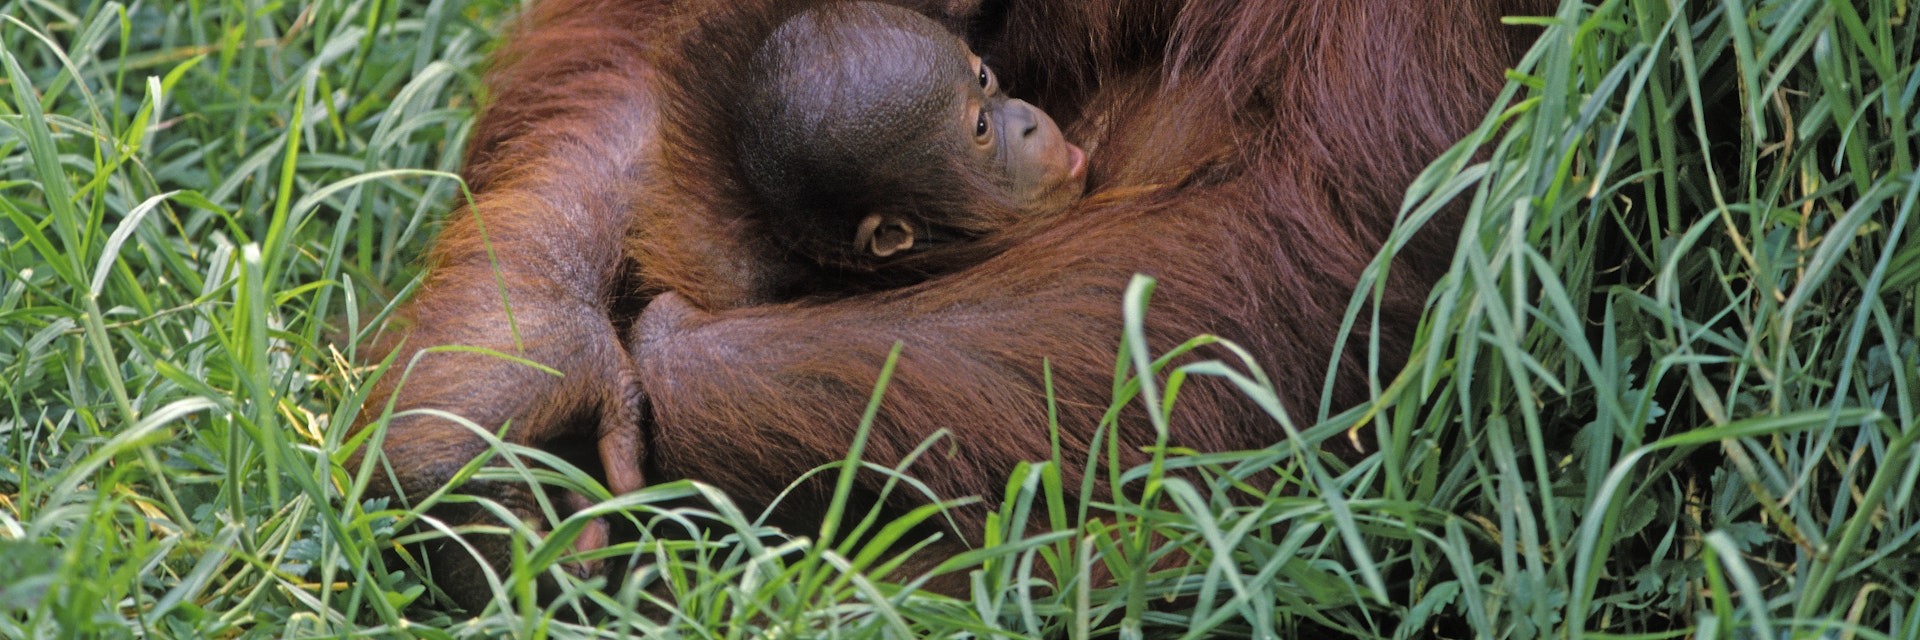 Mother and baby Bornean orangutans (Pongo pygmaeus), Auckland Zoo, Auckland, New Zealand.